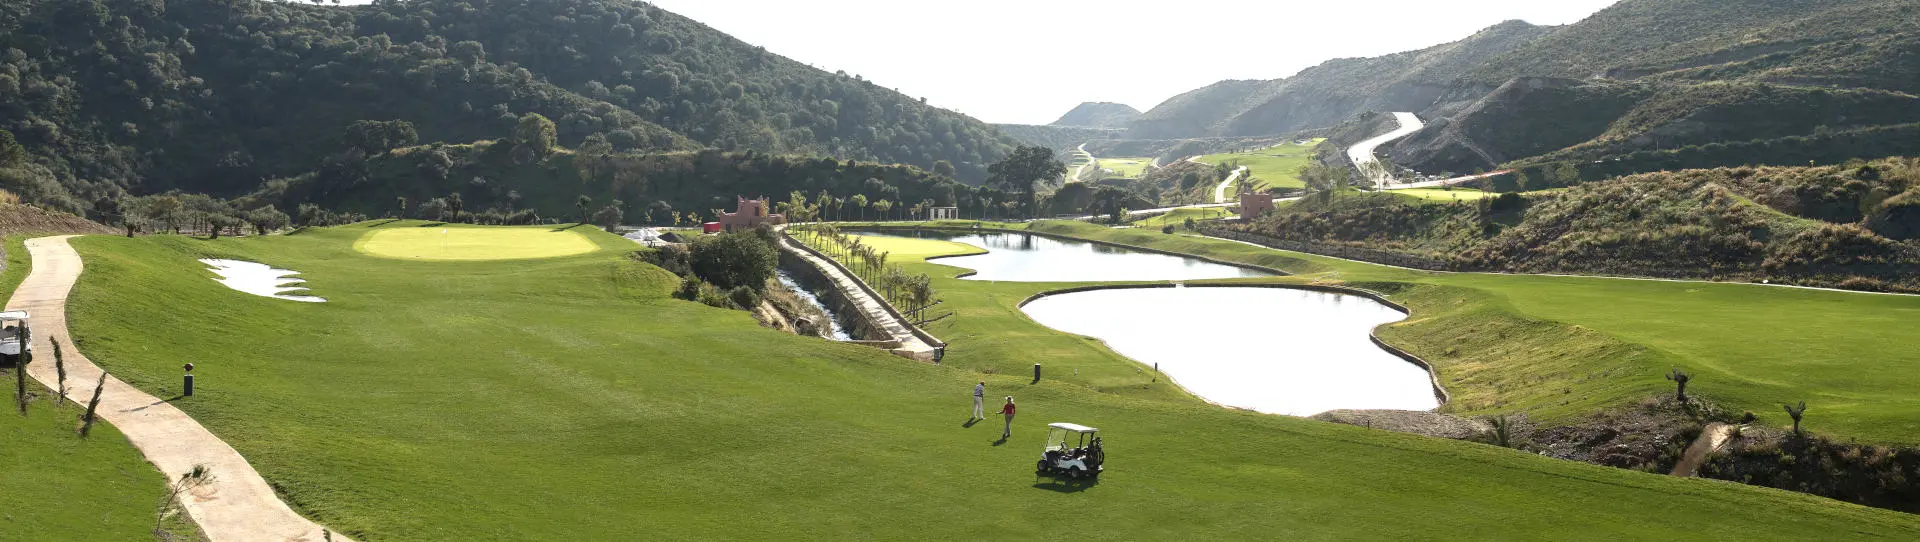 Spain golf holidays - Villa Padierna 7 Rounds Golf Pack - Photo 1